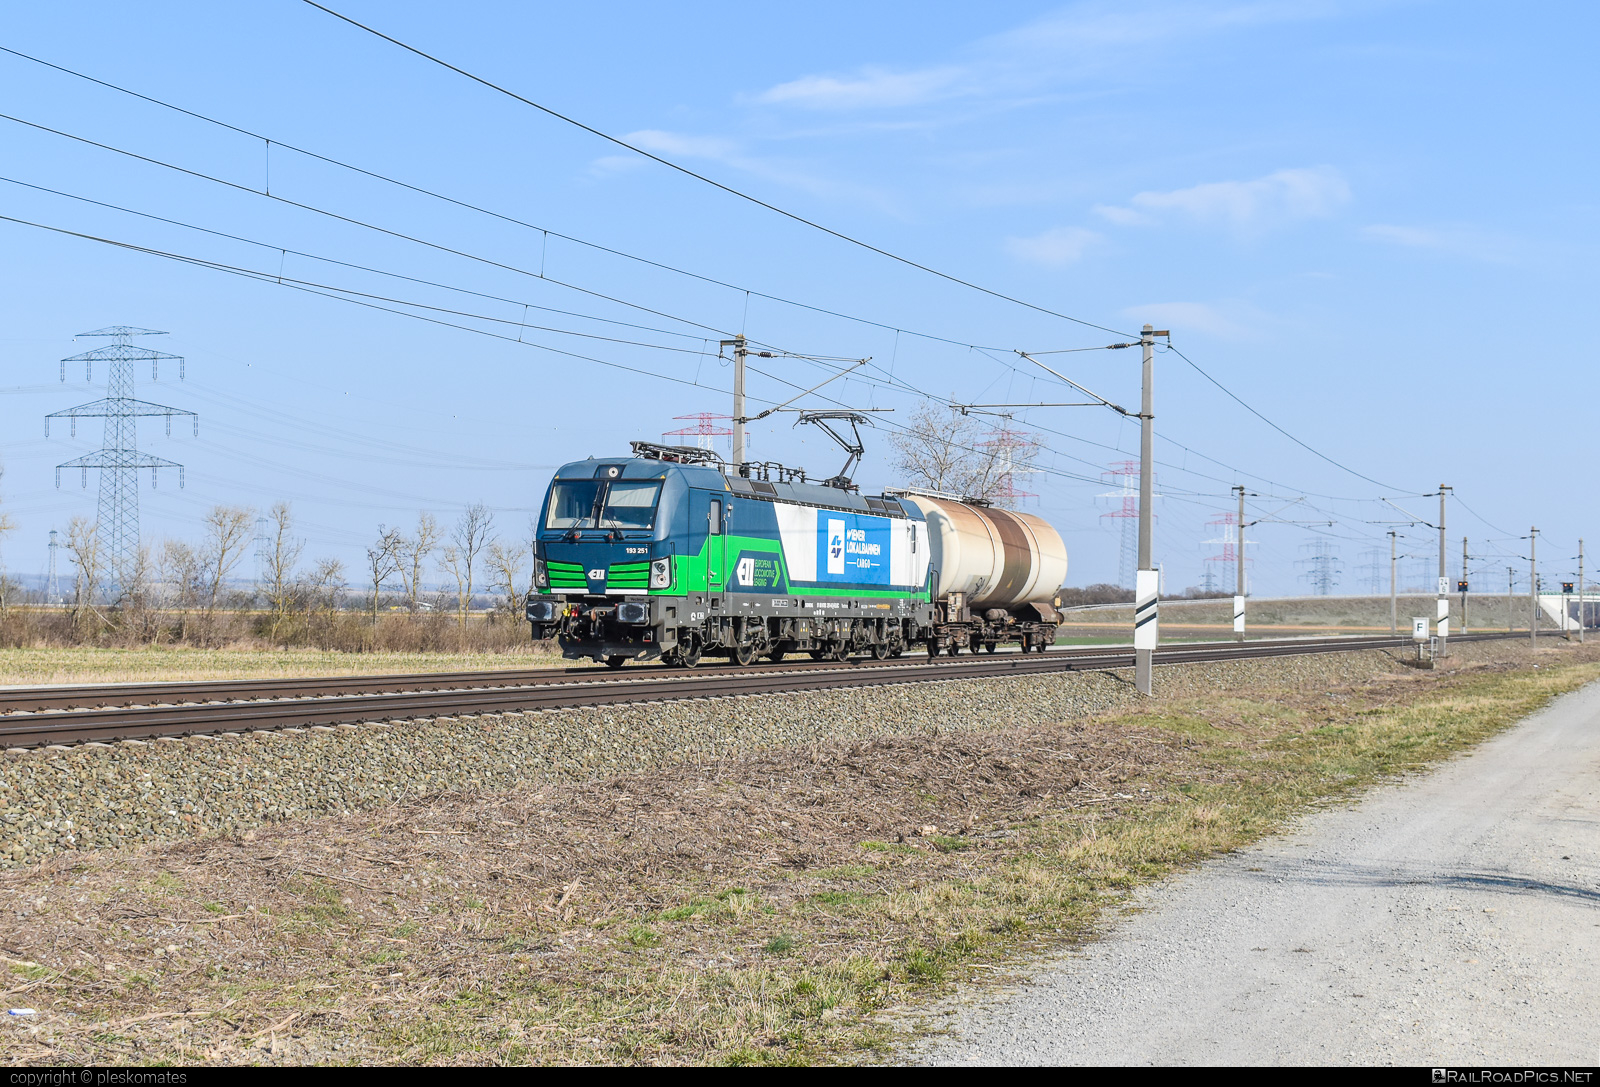 Siemens Vectron AC - 193 251 operated by Wiener Lokalbahnen Cargo GmbH #ell #ellgermany #eloc #europeanlocomotiveleasing #kesselwagen #siemens #siemensVectron #siemensVectronAC #tankwagon #vectron #vectronAC #wienerlokalbahnencargo #wienerlokalbahnencargogmbh #wlc